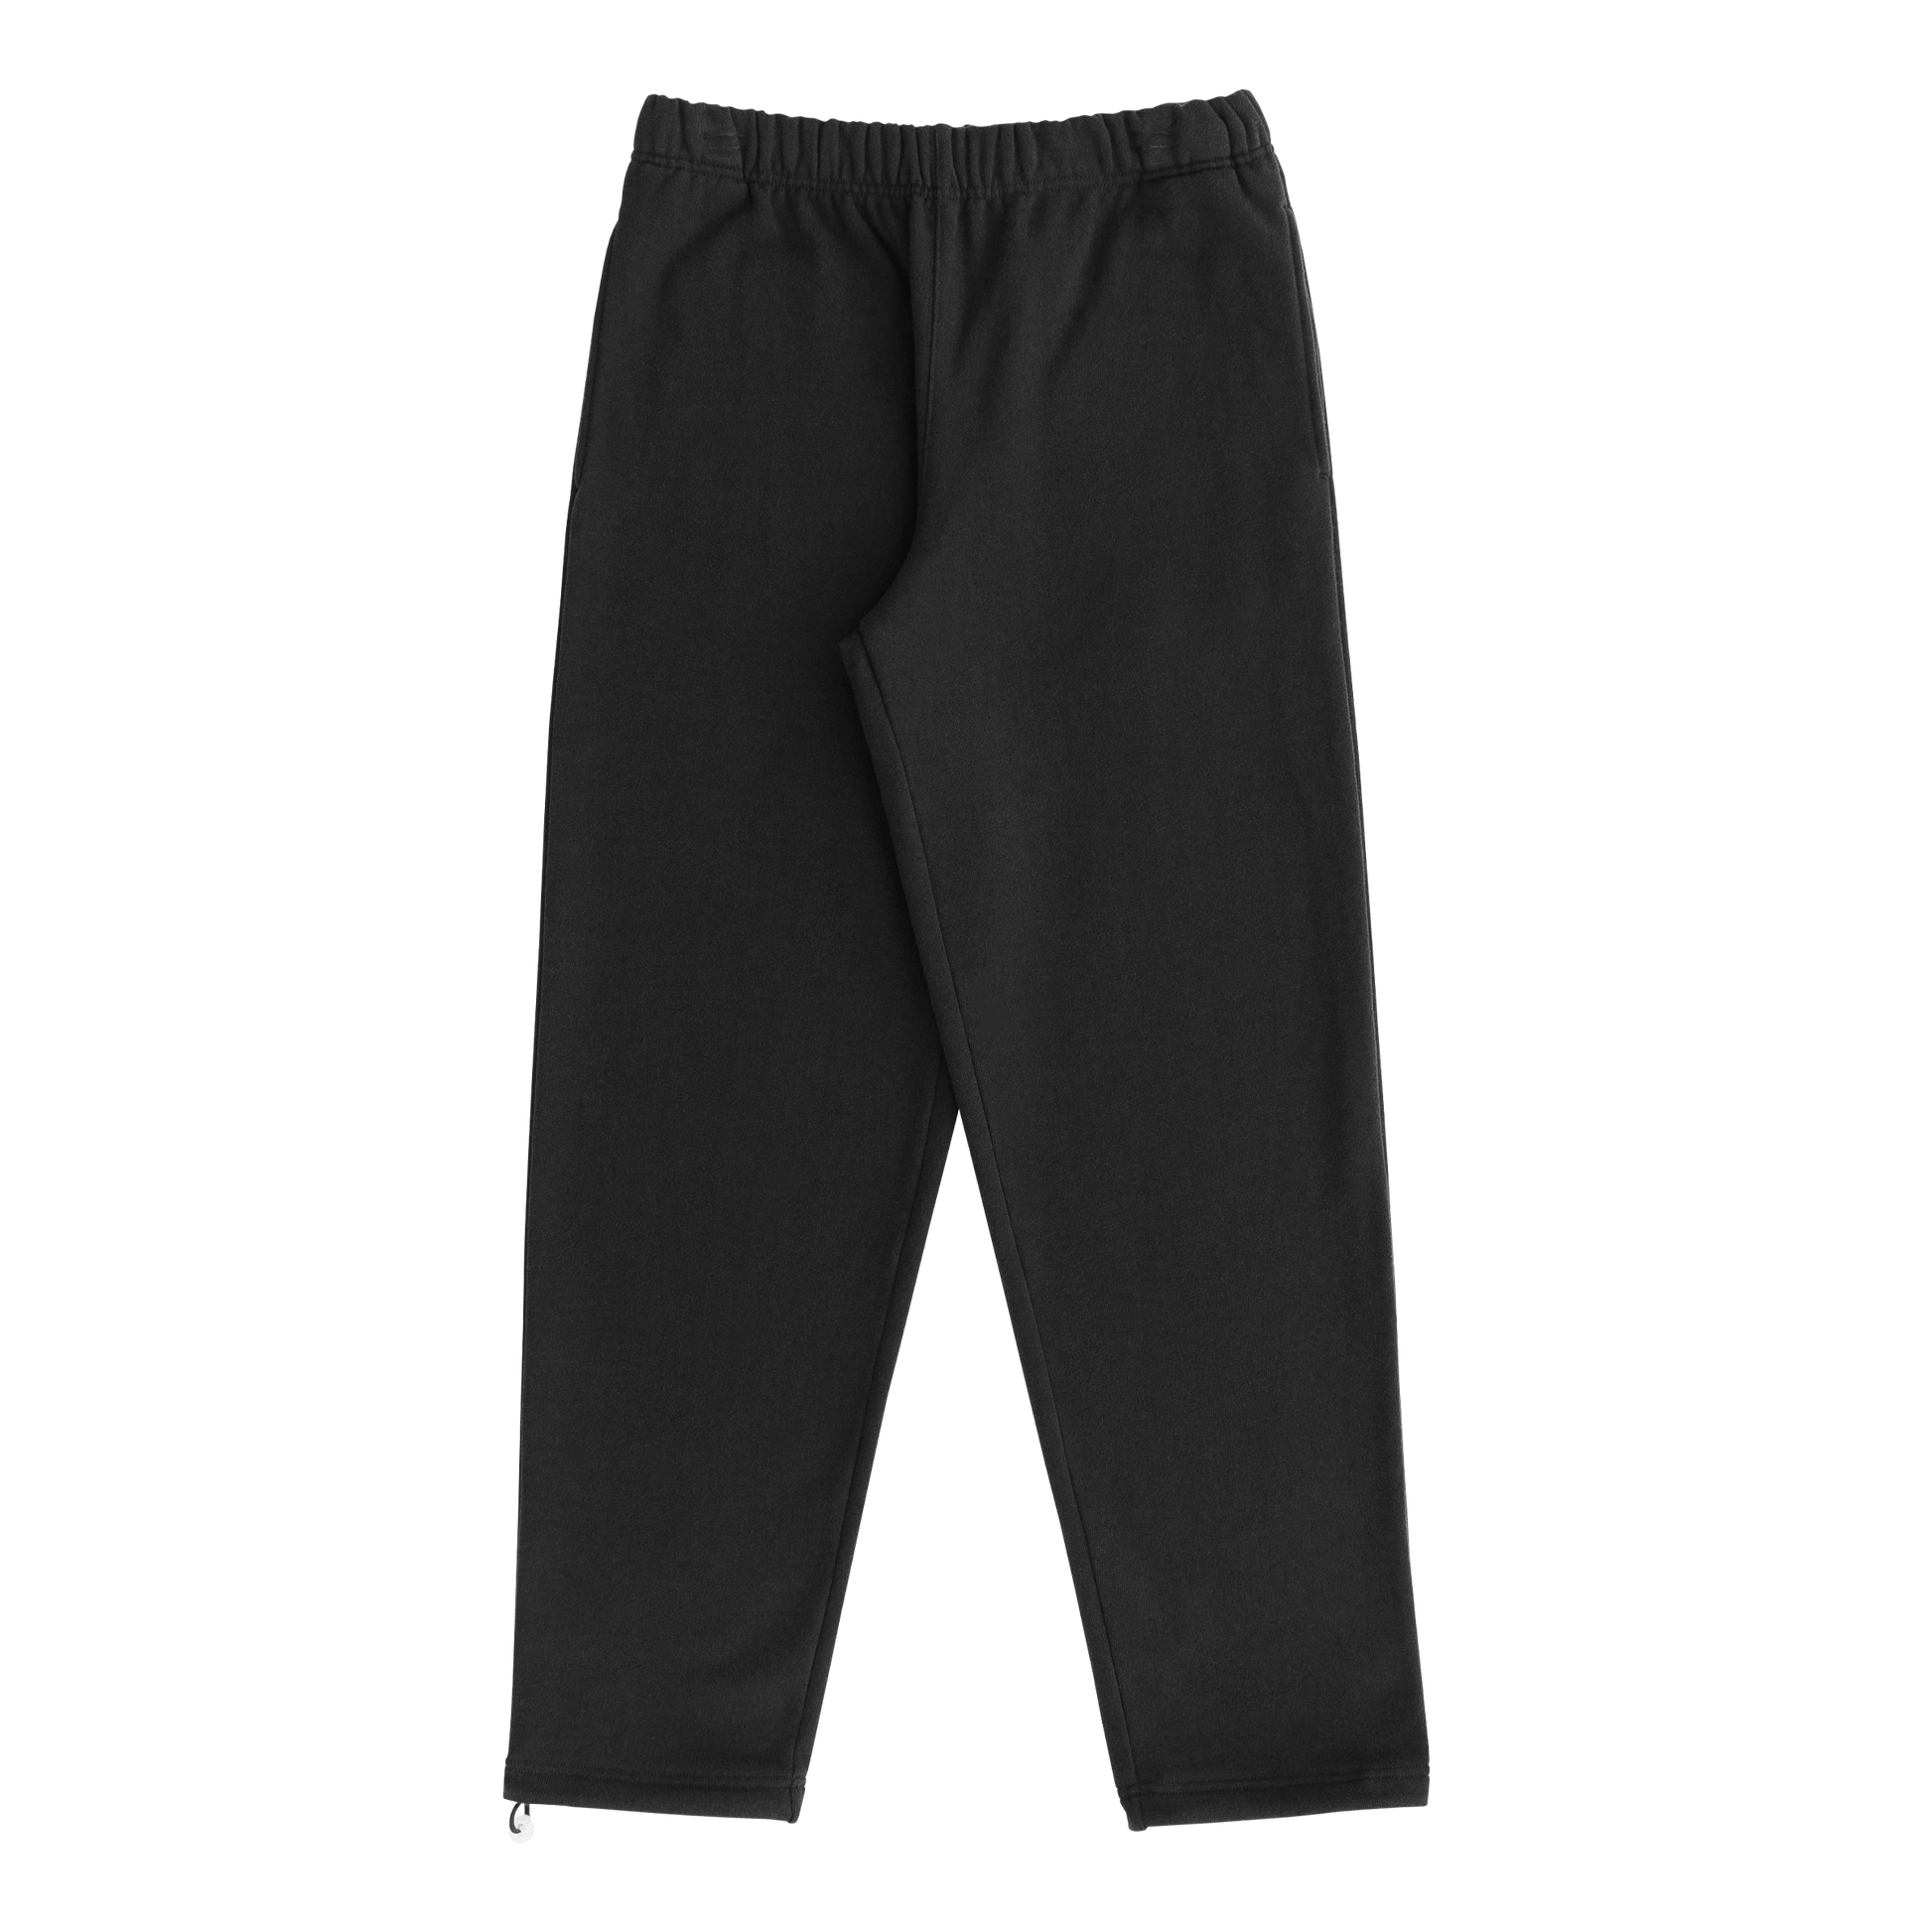 Sweatpants Open Black Youth XL